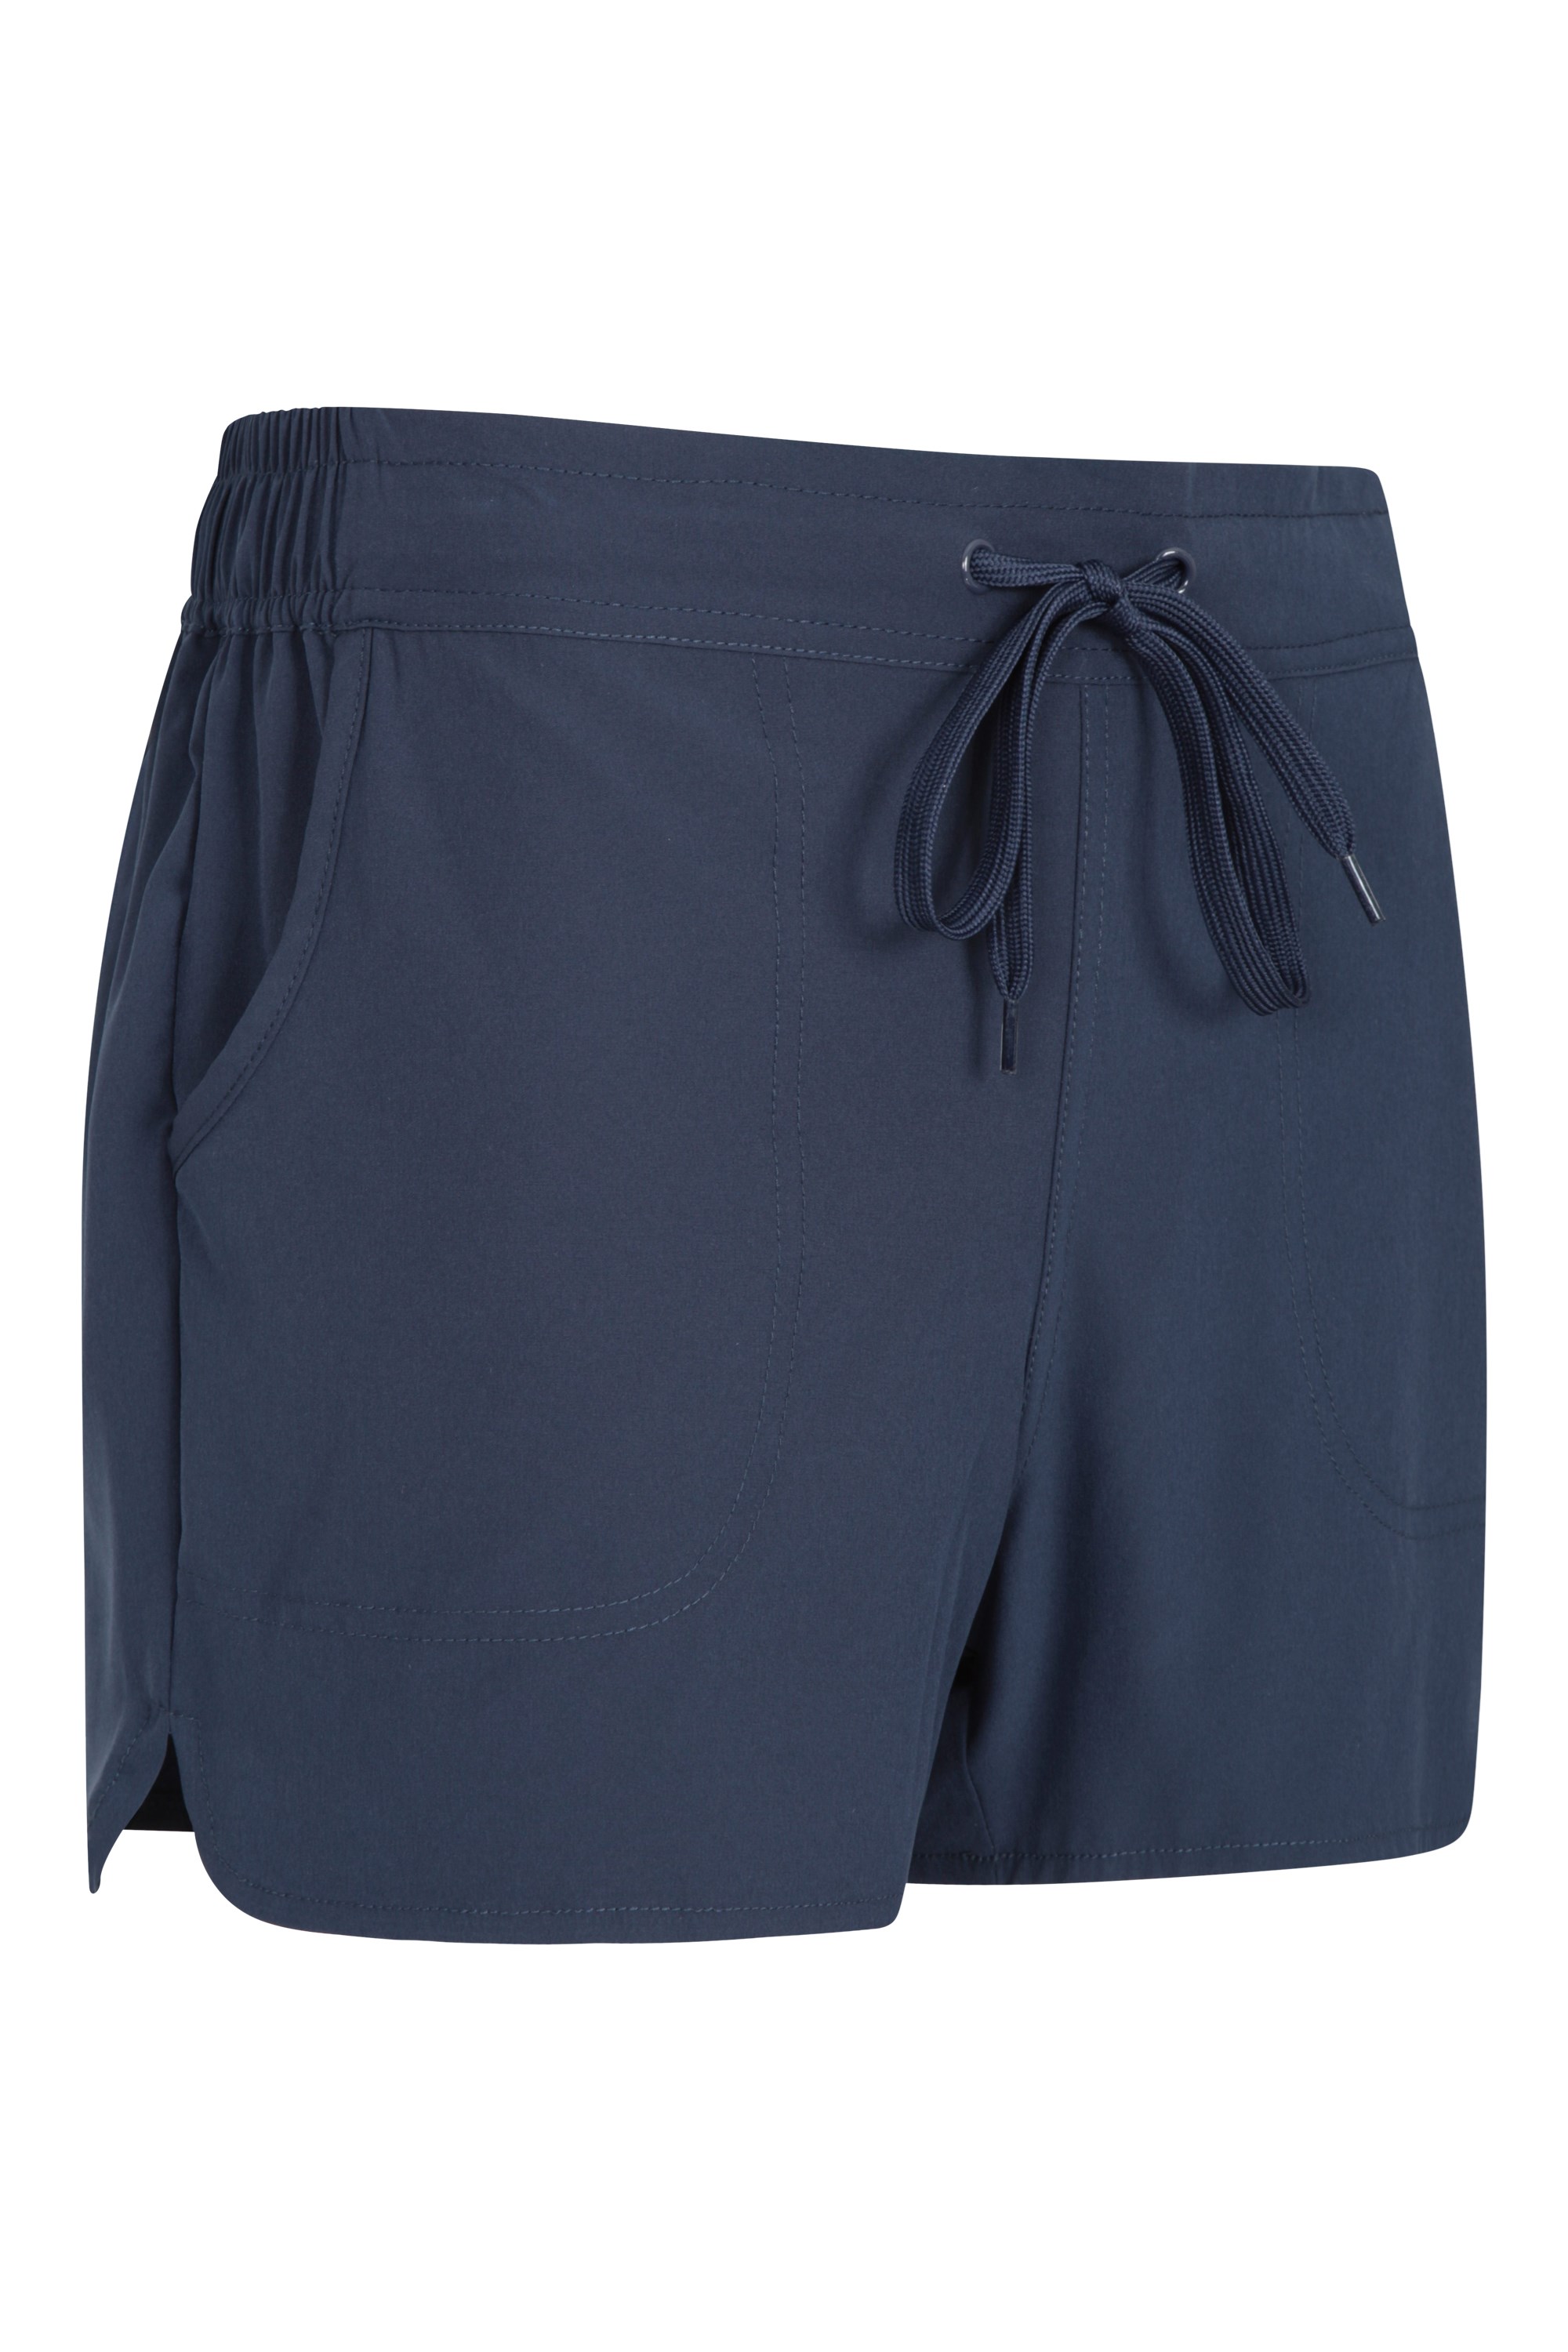 Olyvenn Women's Jersey Shorts with Pockets Stretchy Beach Shorts